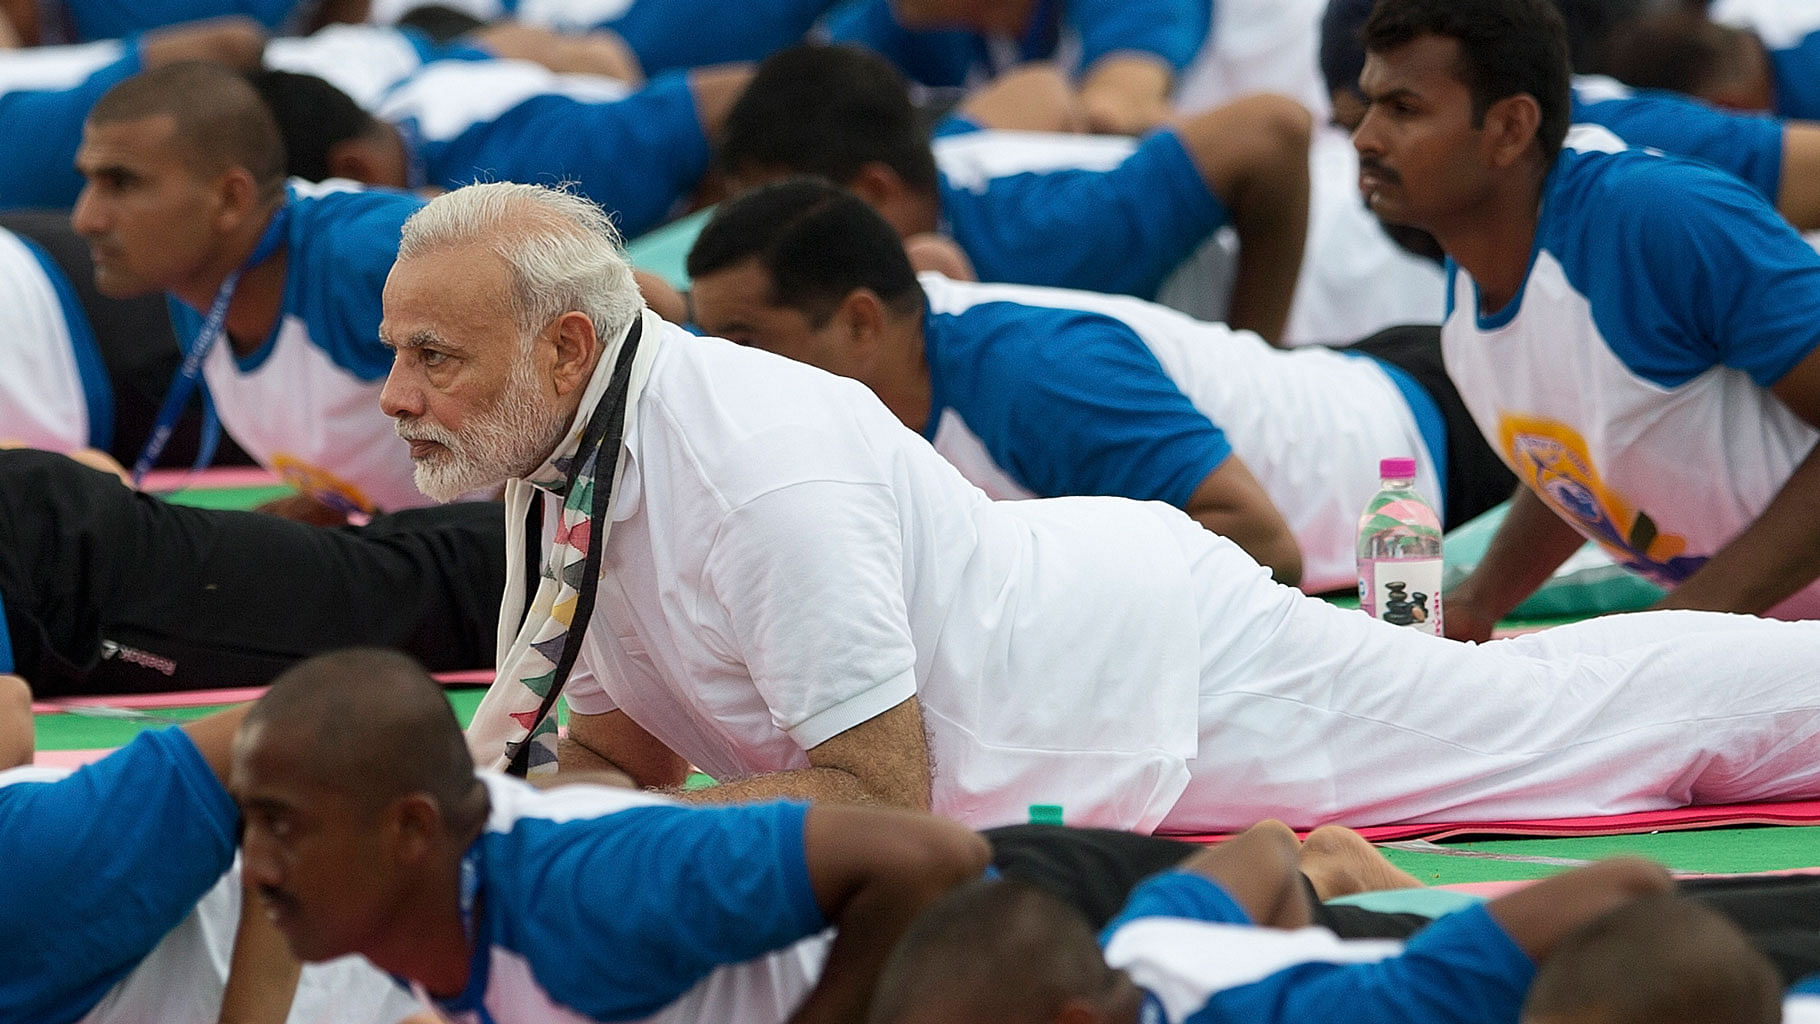 PM Modi practising Yoga on International Yoga Day, in Chandigarh. (Photo: AP)